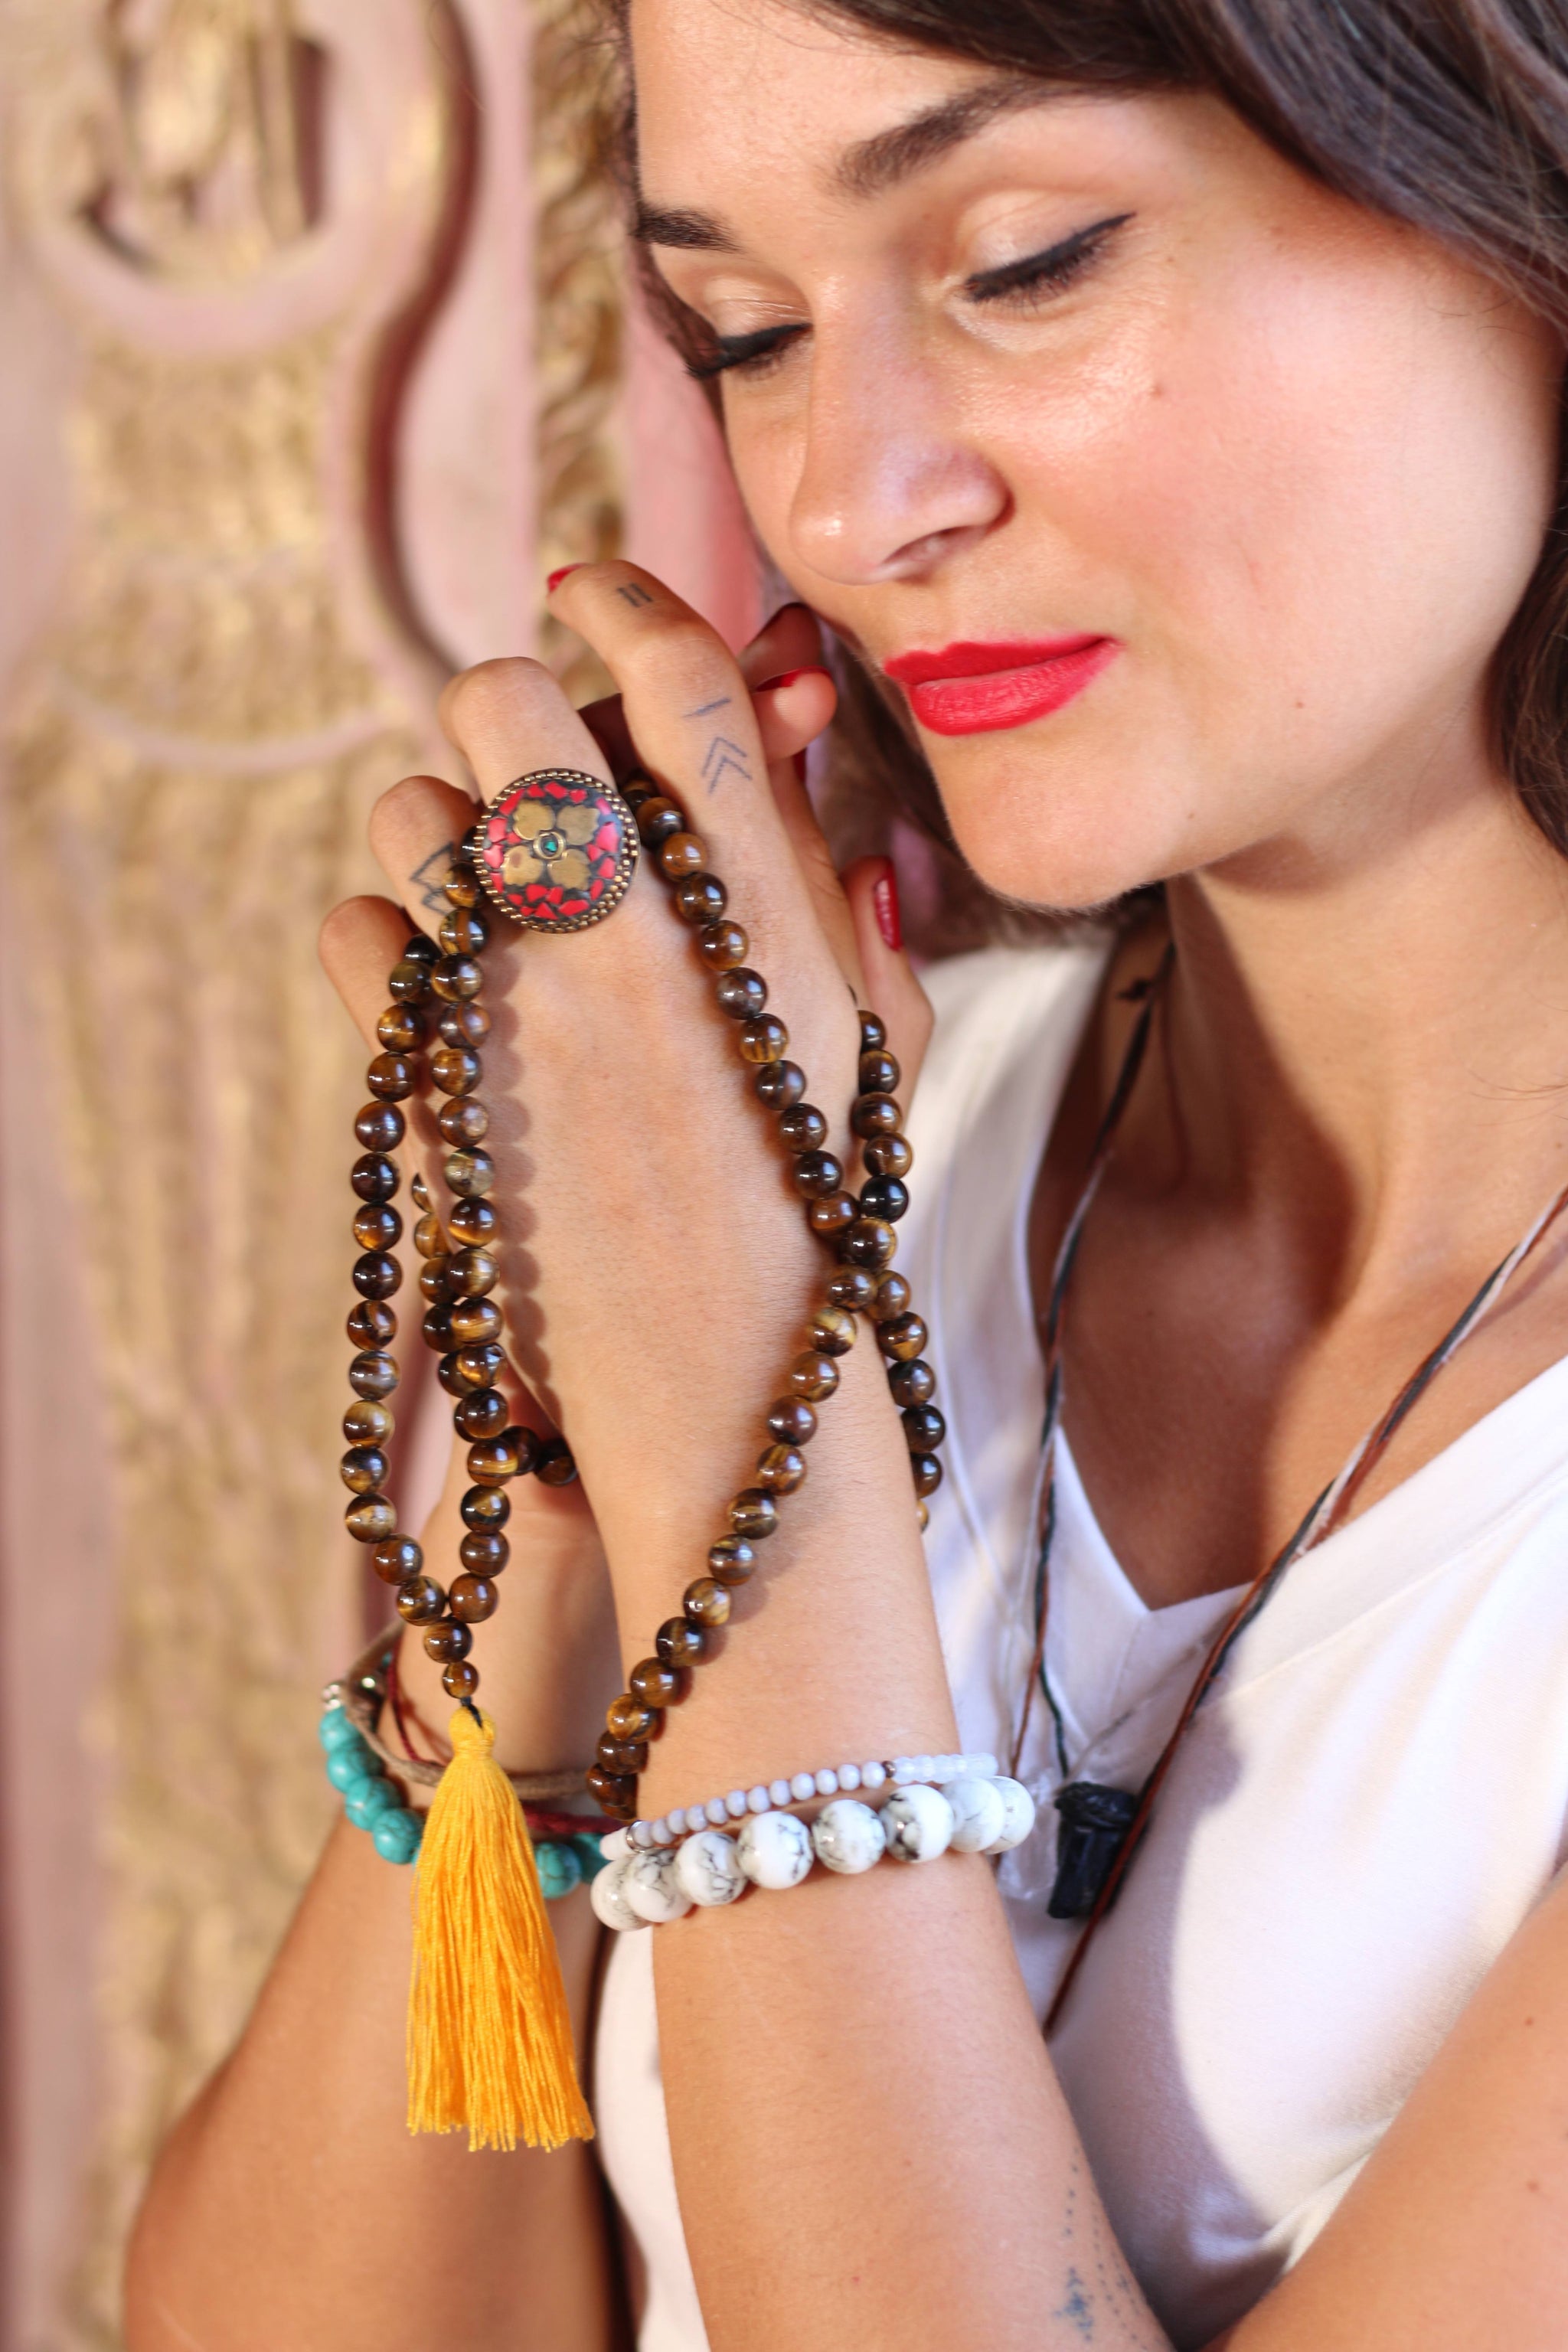 Tiger Eye Buddhist Mala Beads Necklace with Yellow Tassels